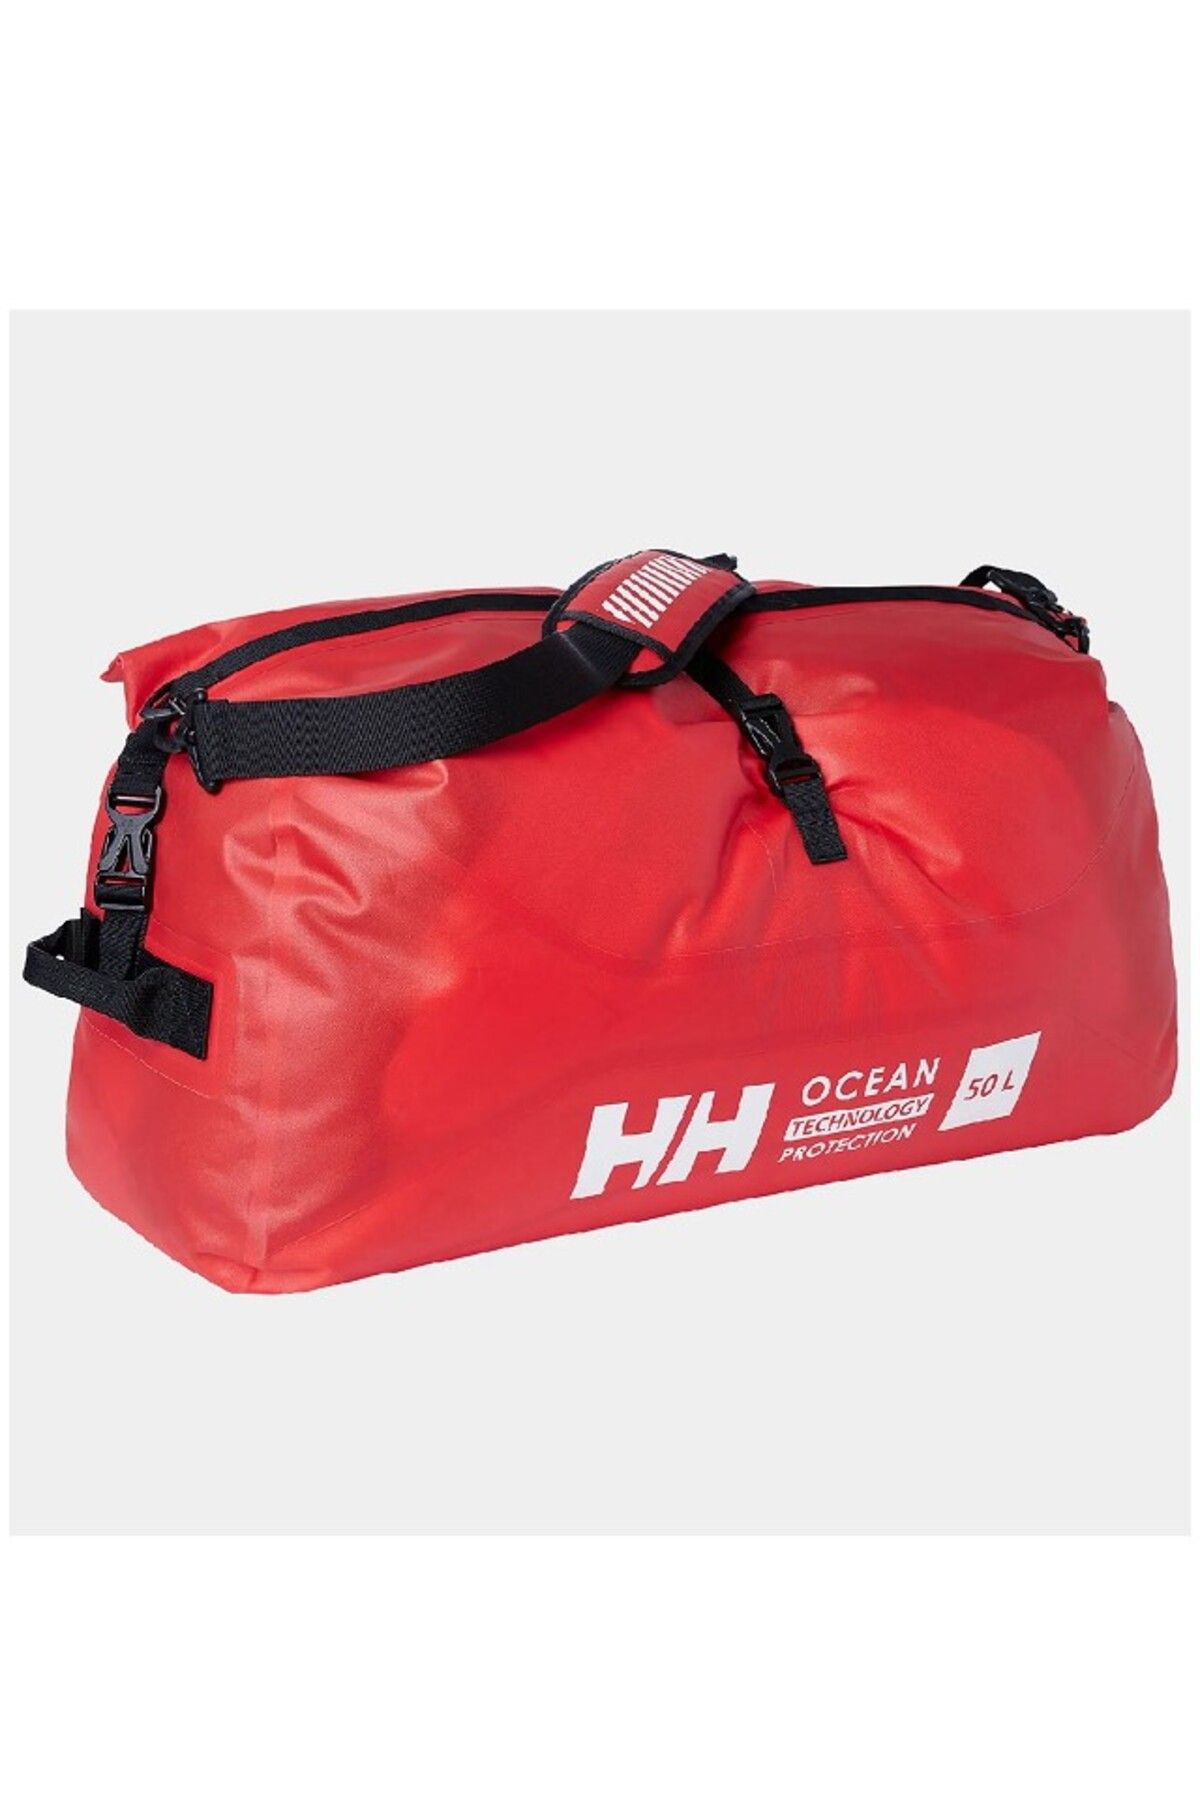 Helly Hansen Offshore Waterproof Spor Çanta 50L